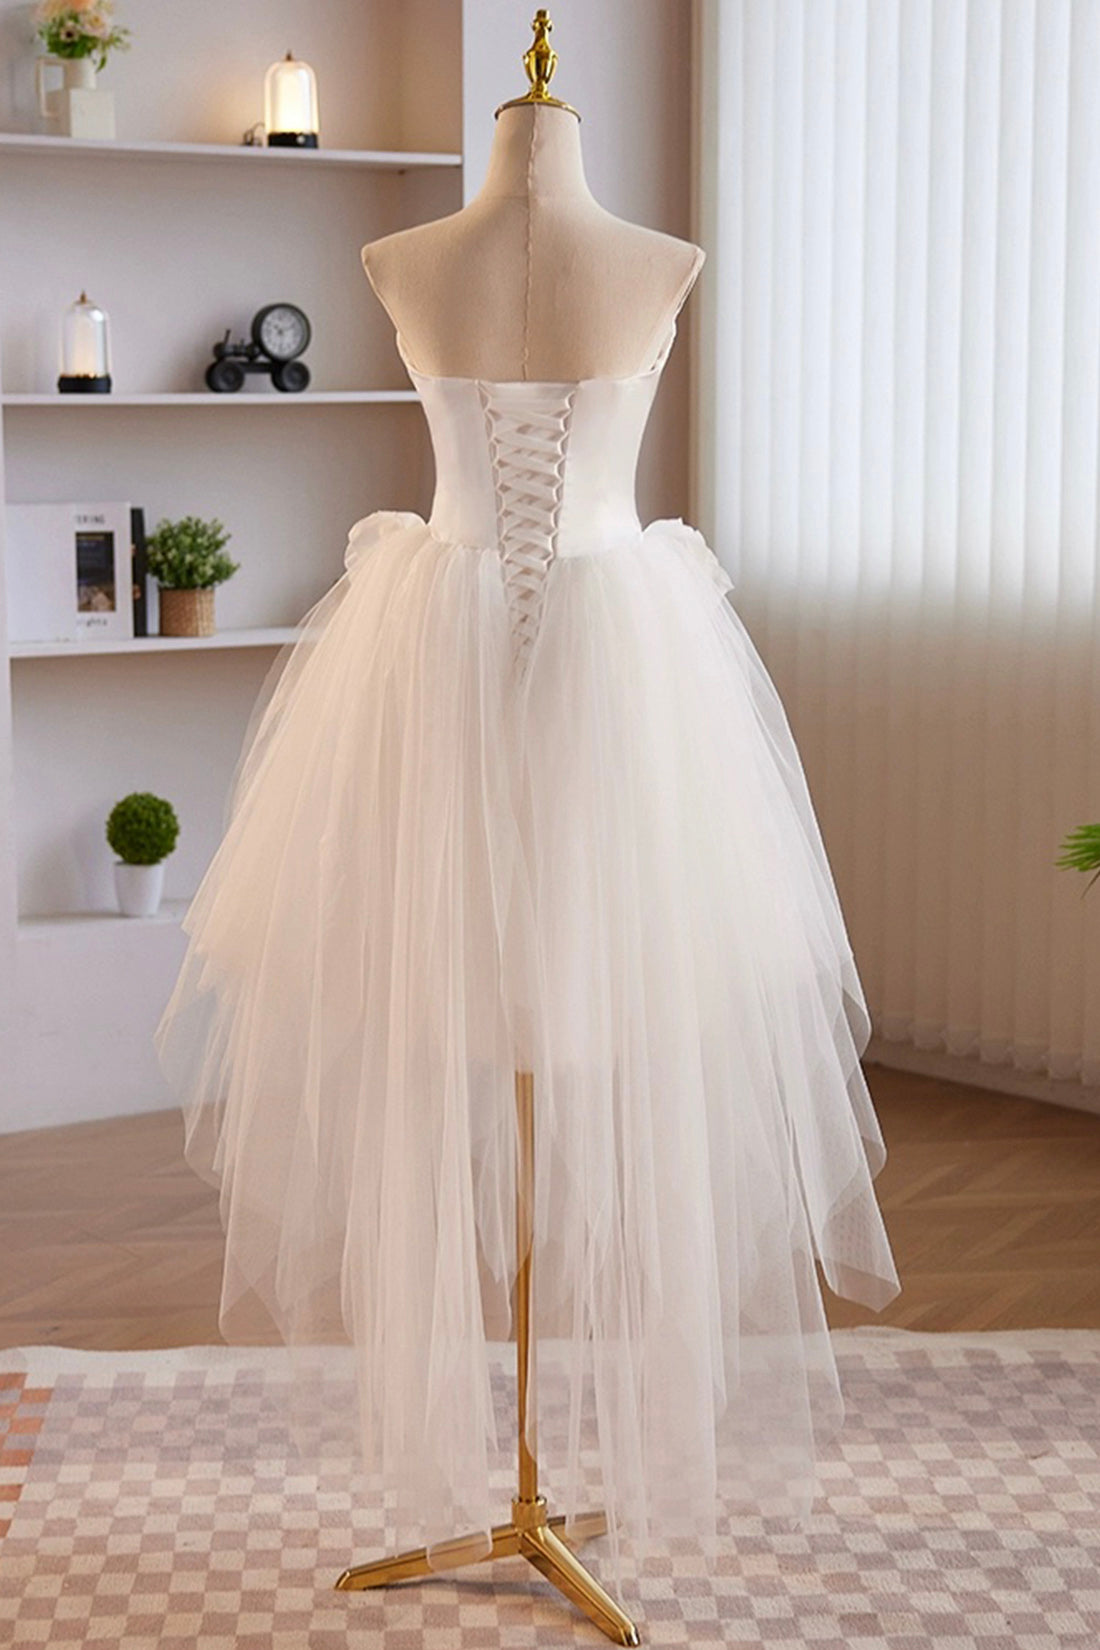 Unique White Strapless Irregular Tulle Short Prom Dress, White Party Dress